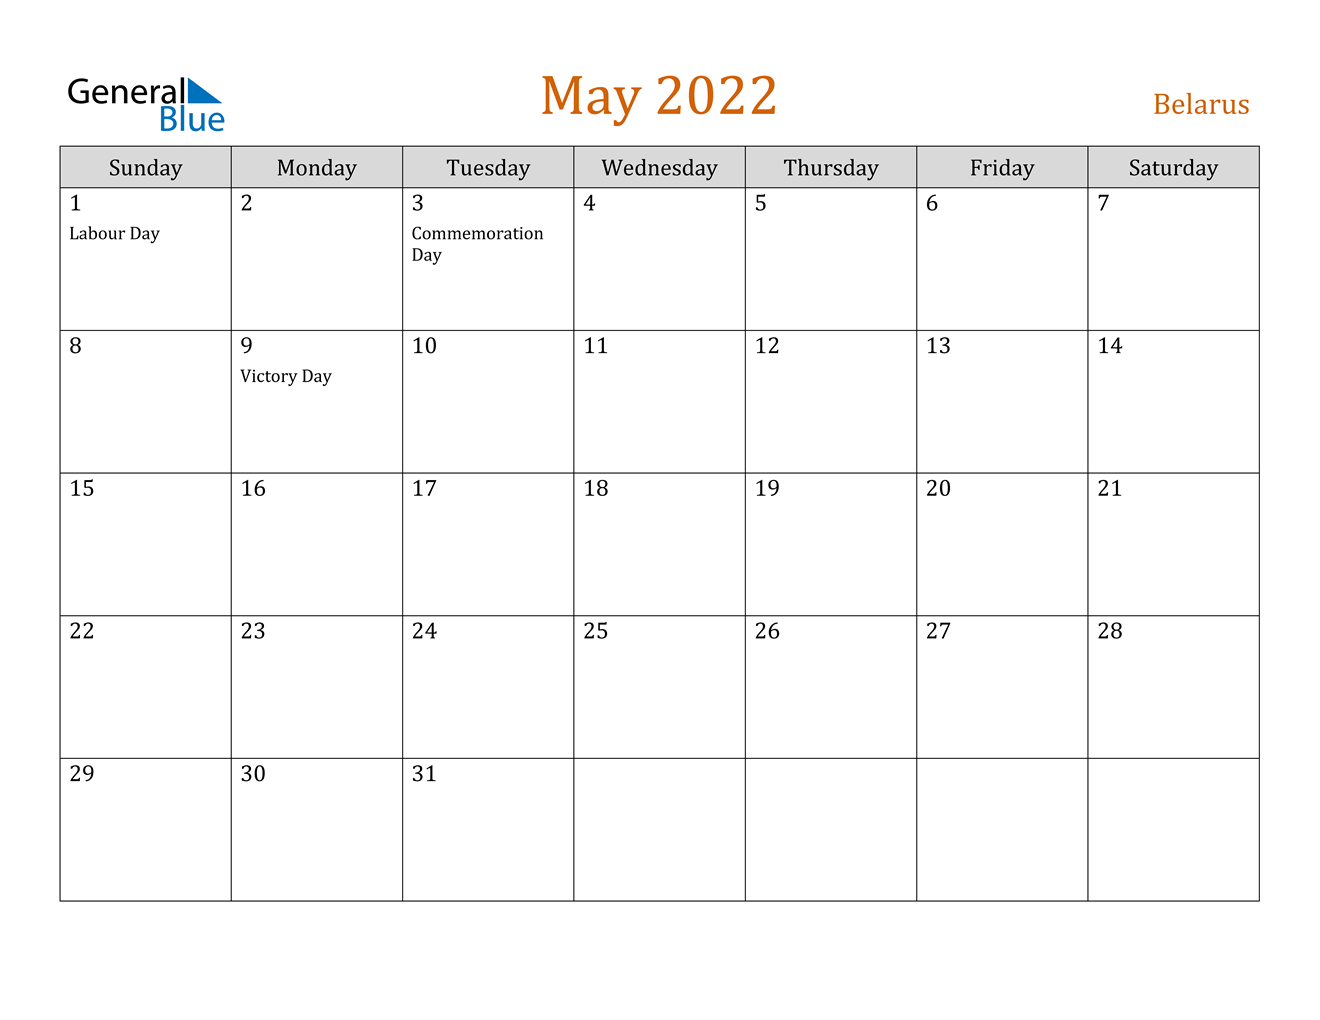 May 2022 Calendar - Belarus